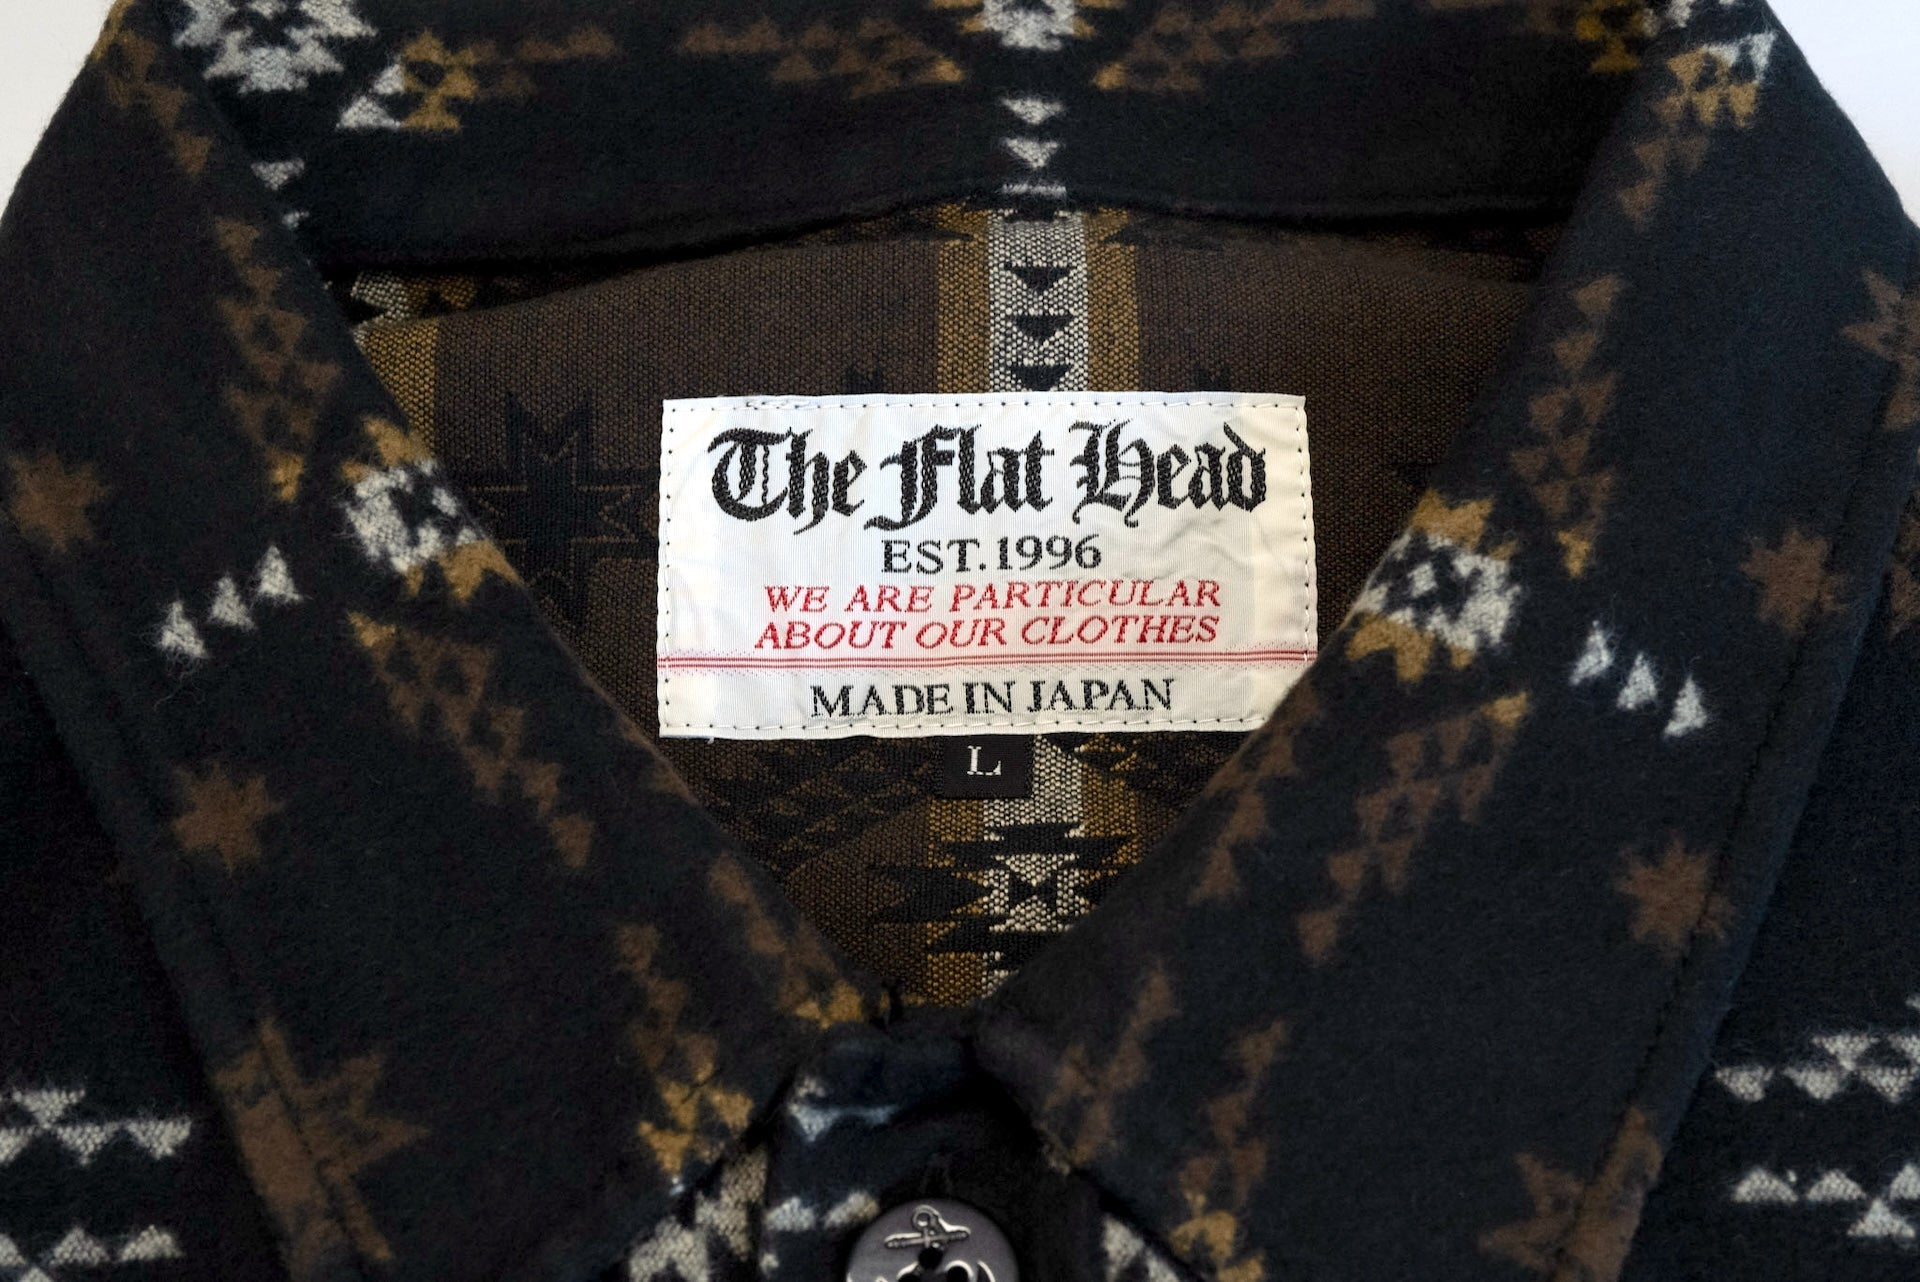 The Flat Head "Navajo Style" Cotton Blanket Jacket (Black)